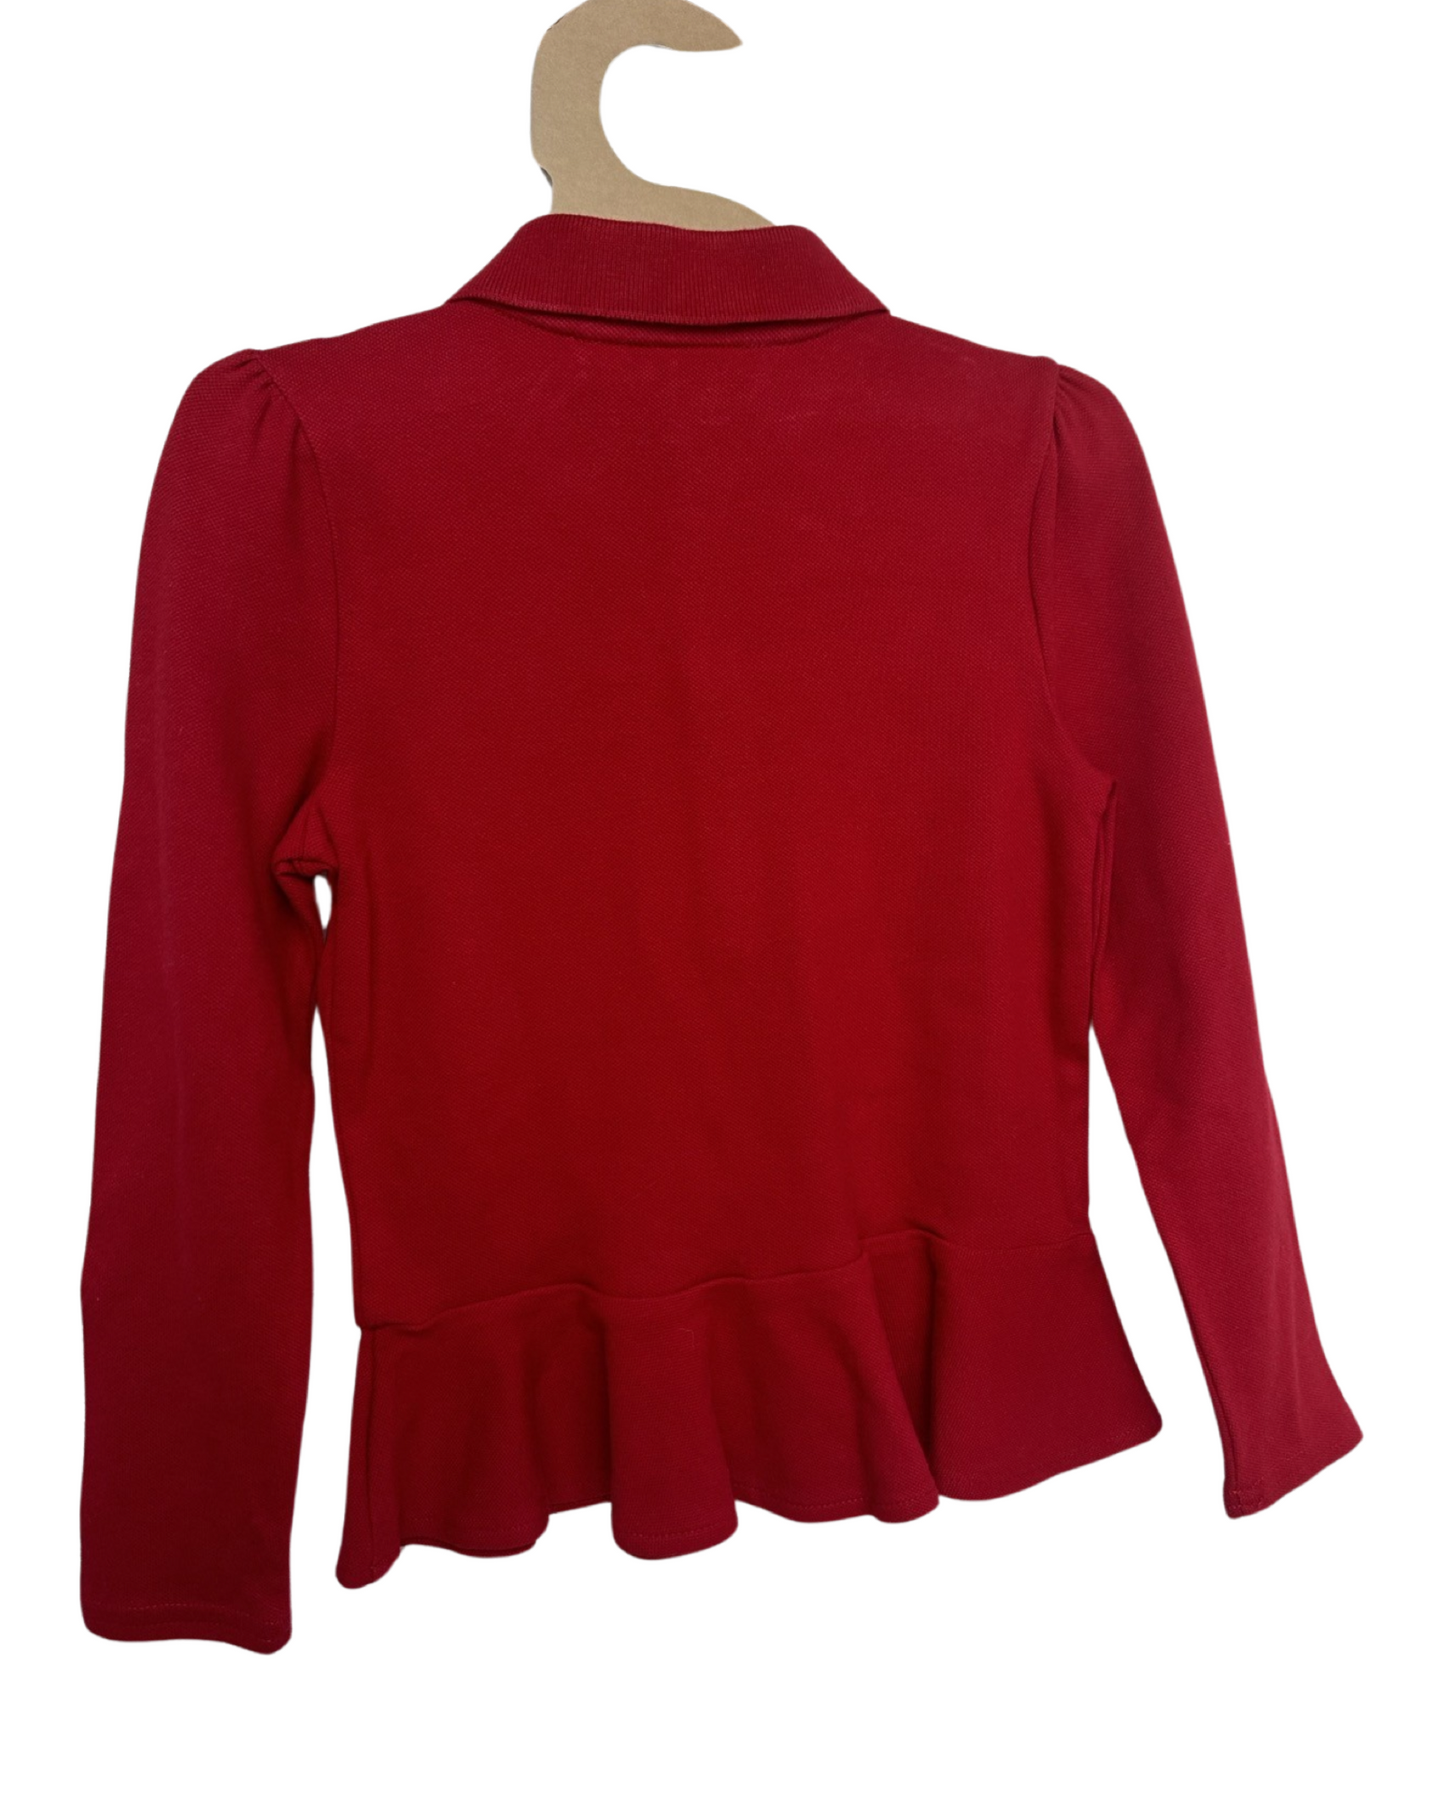 Ralph Lauren red polo shirt with peplum trim (size 4-5yrs)